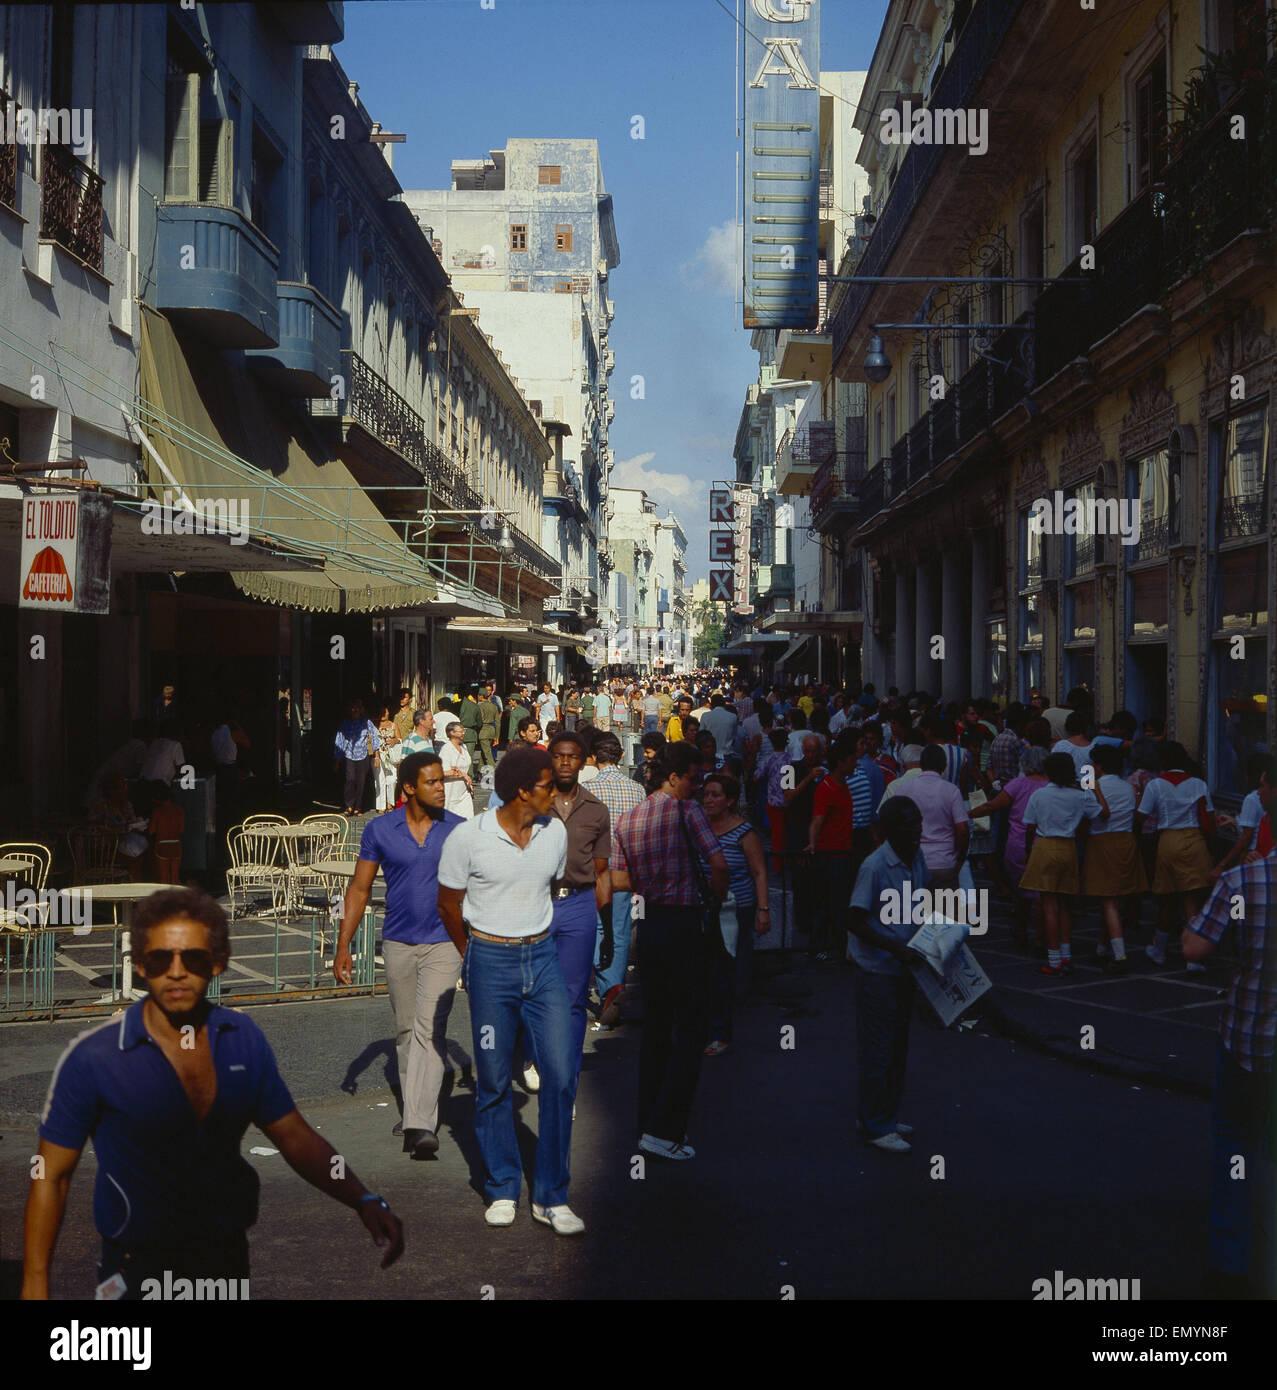 Karibik/ Insel Cuba, Havanna, Altstadt, Fussg ngerzone Stock Photo - Alamy